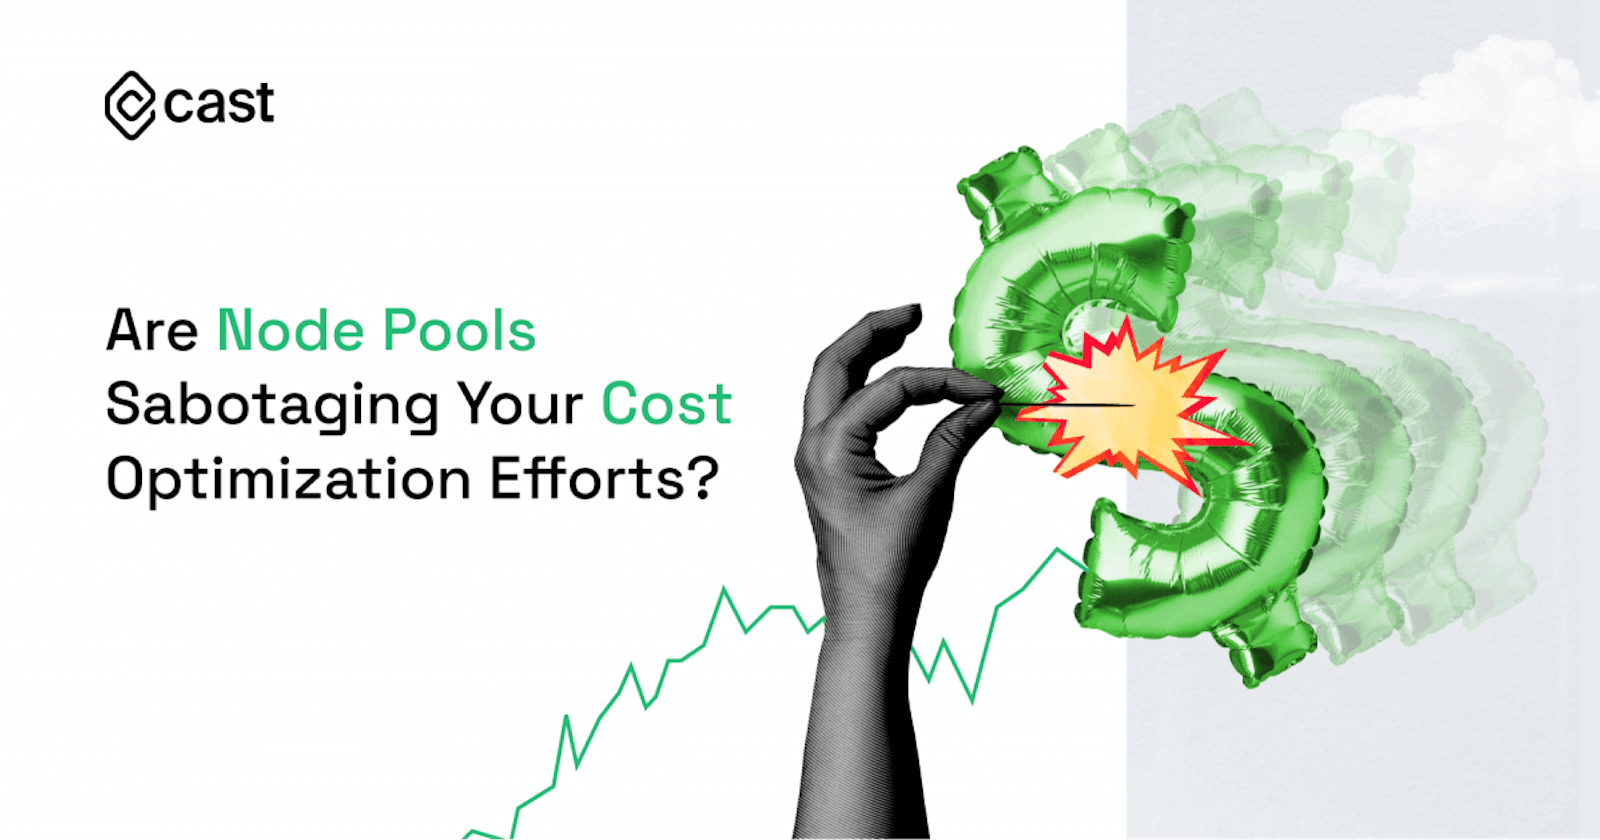 Are Node Pools Sabotaging Your Cost Optimization Efforts?